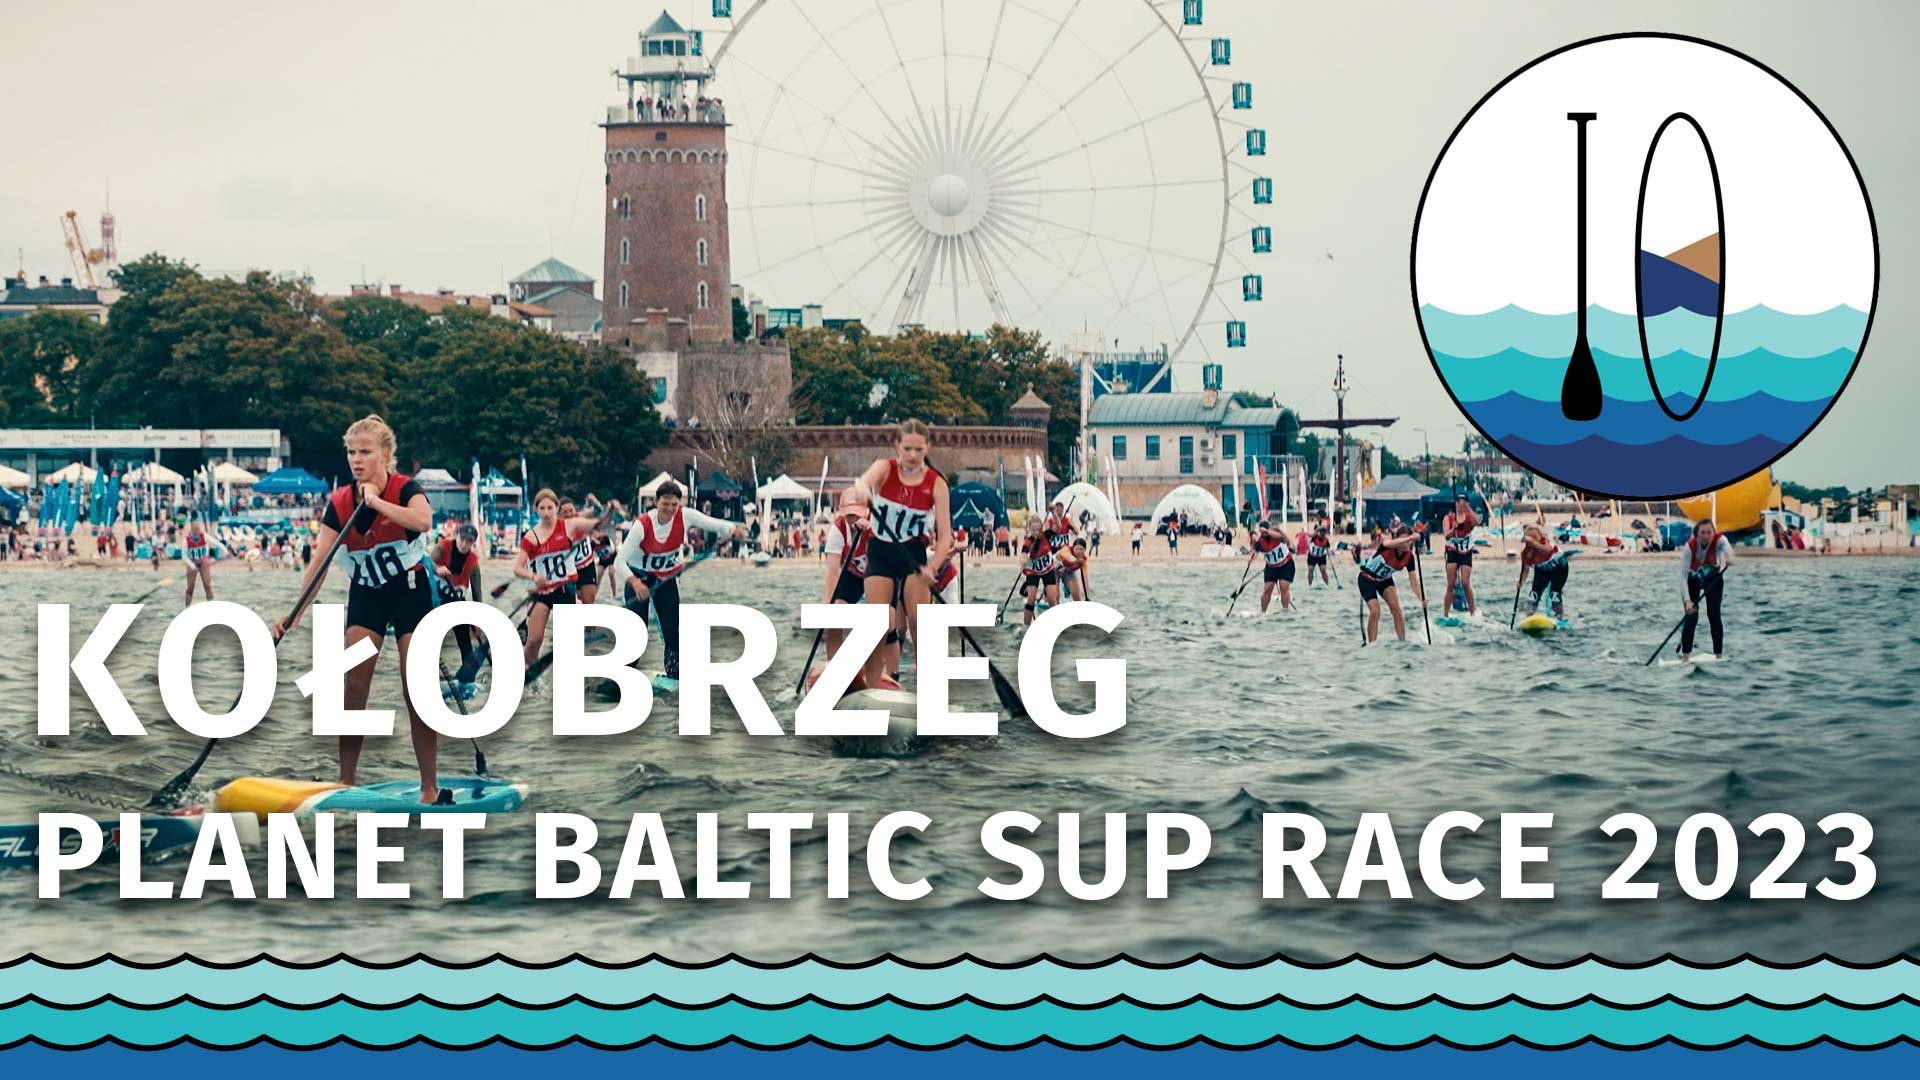 Planet Baltic SUP Race 2023 - Kołobrzeg